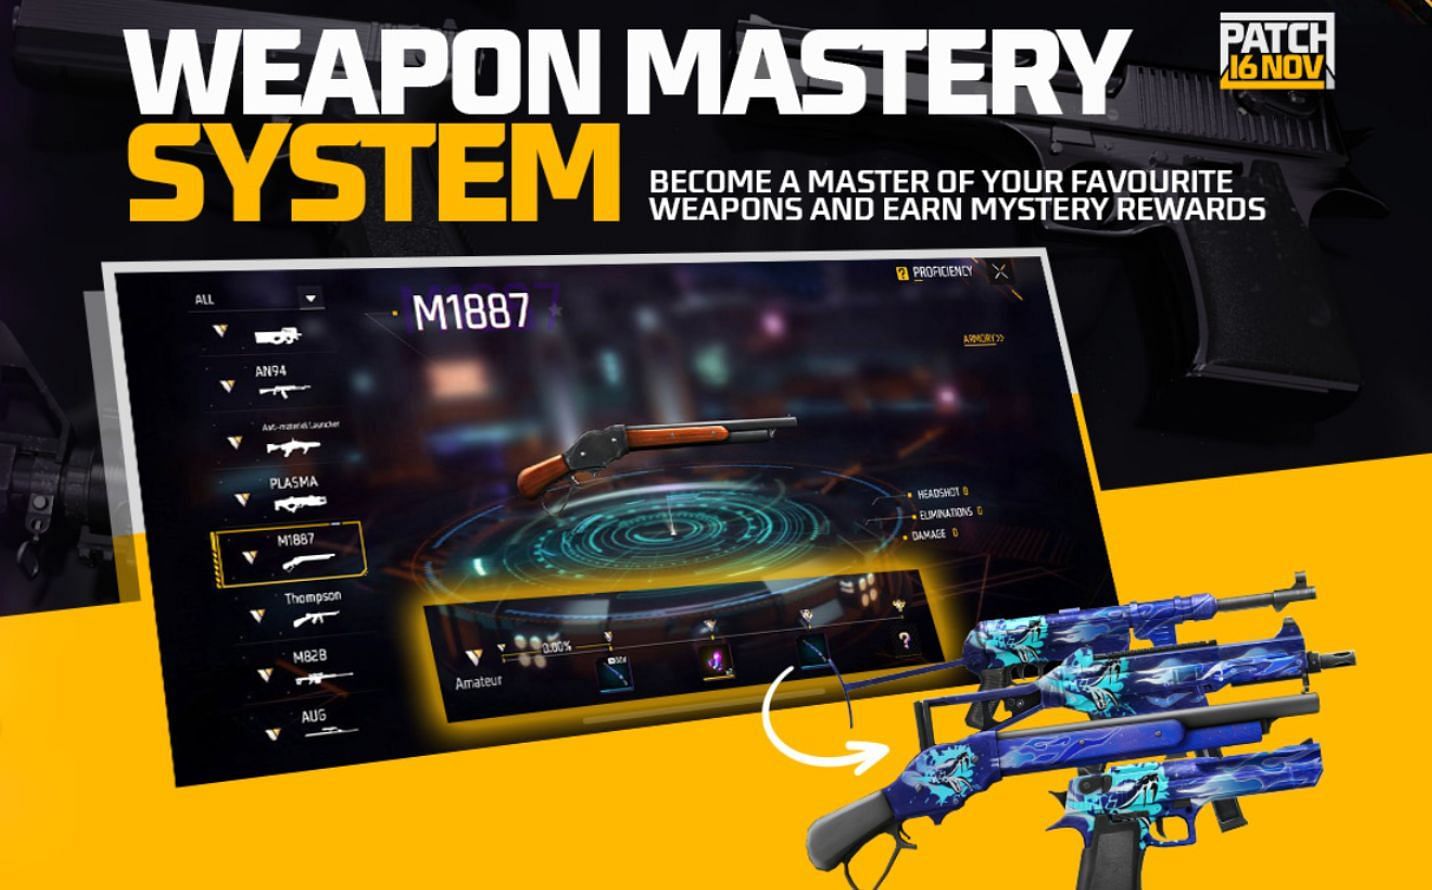 Weapon Mastery System (Image via Garena)